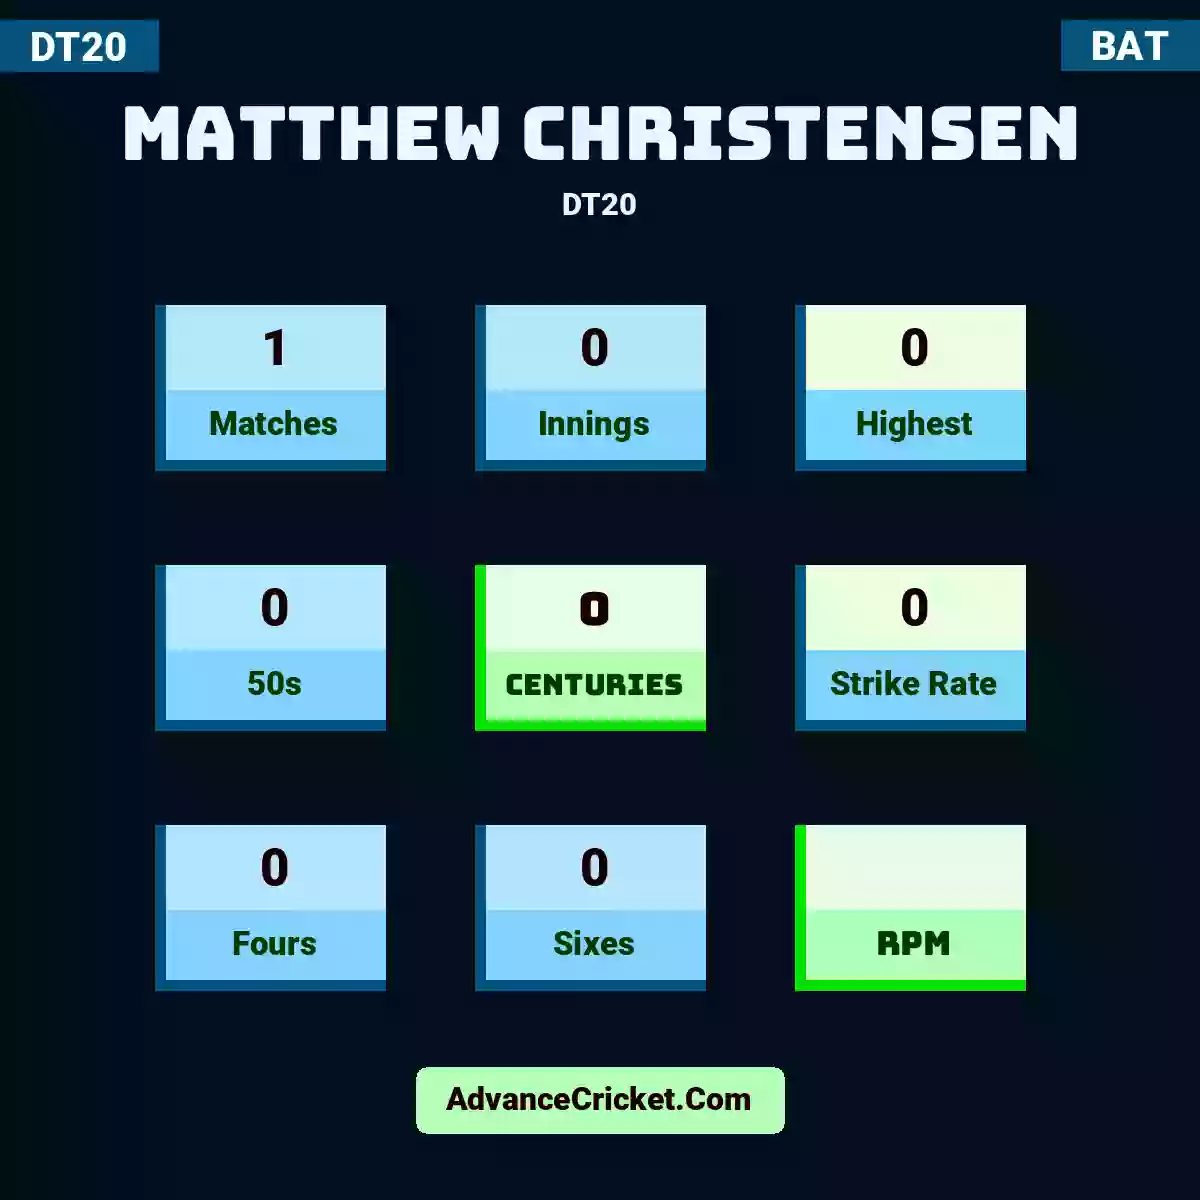 Matthew Christensen DT20 , Matthew Christensen played 1 matches, scored 0 runs as highest, 0 half-centuries, and 0 centuries, with a strike rate of 0. M.Christensen hit 0 fours and 0 sixes.